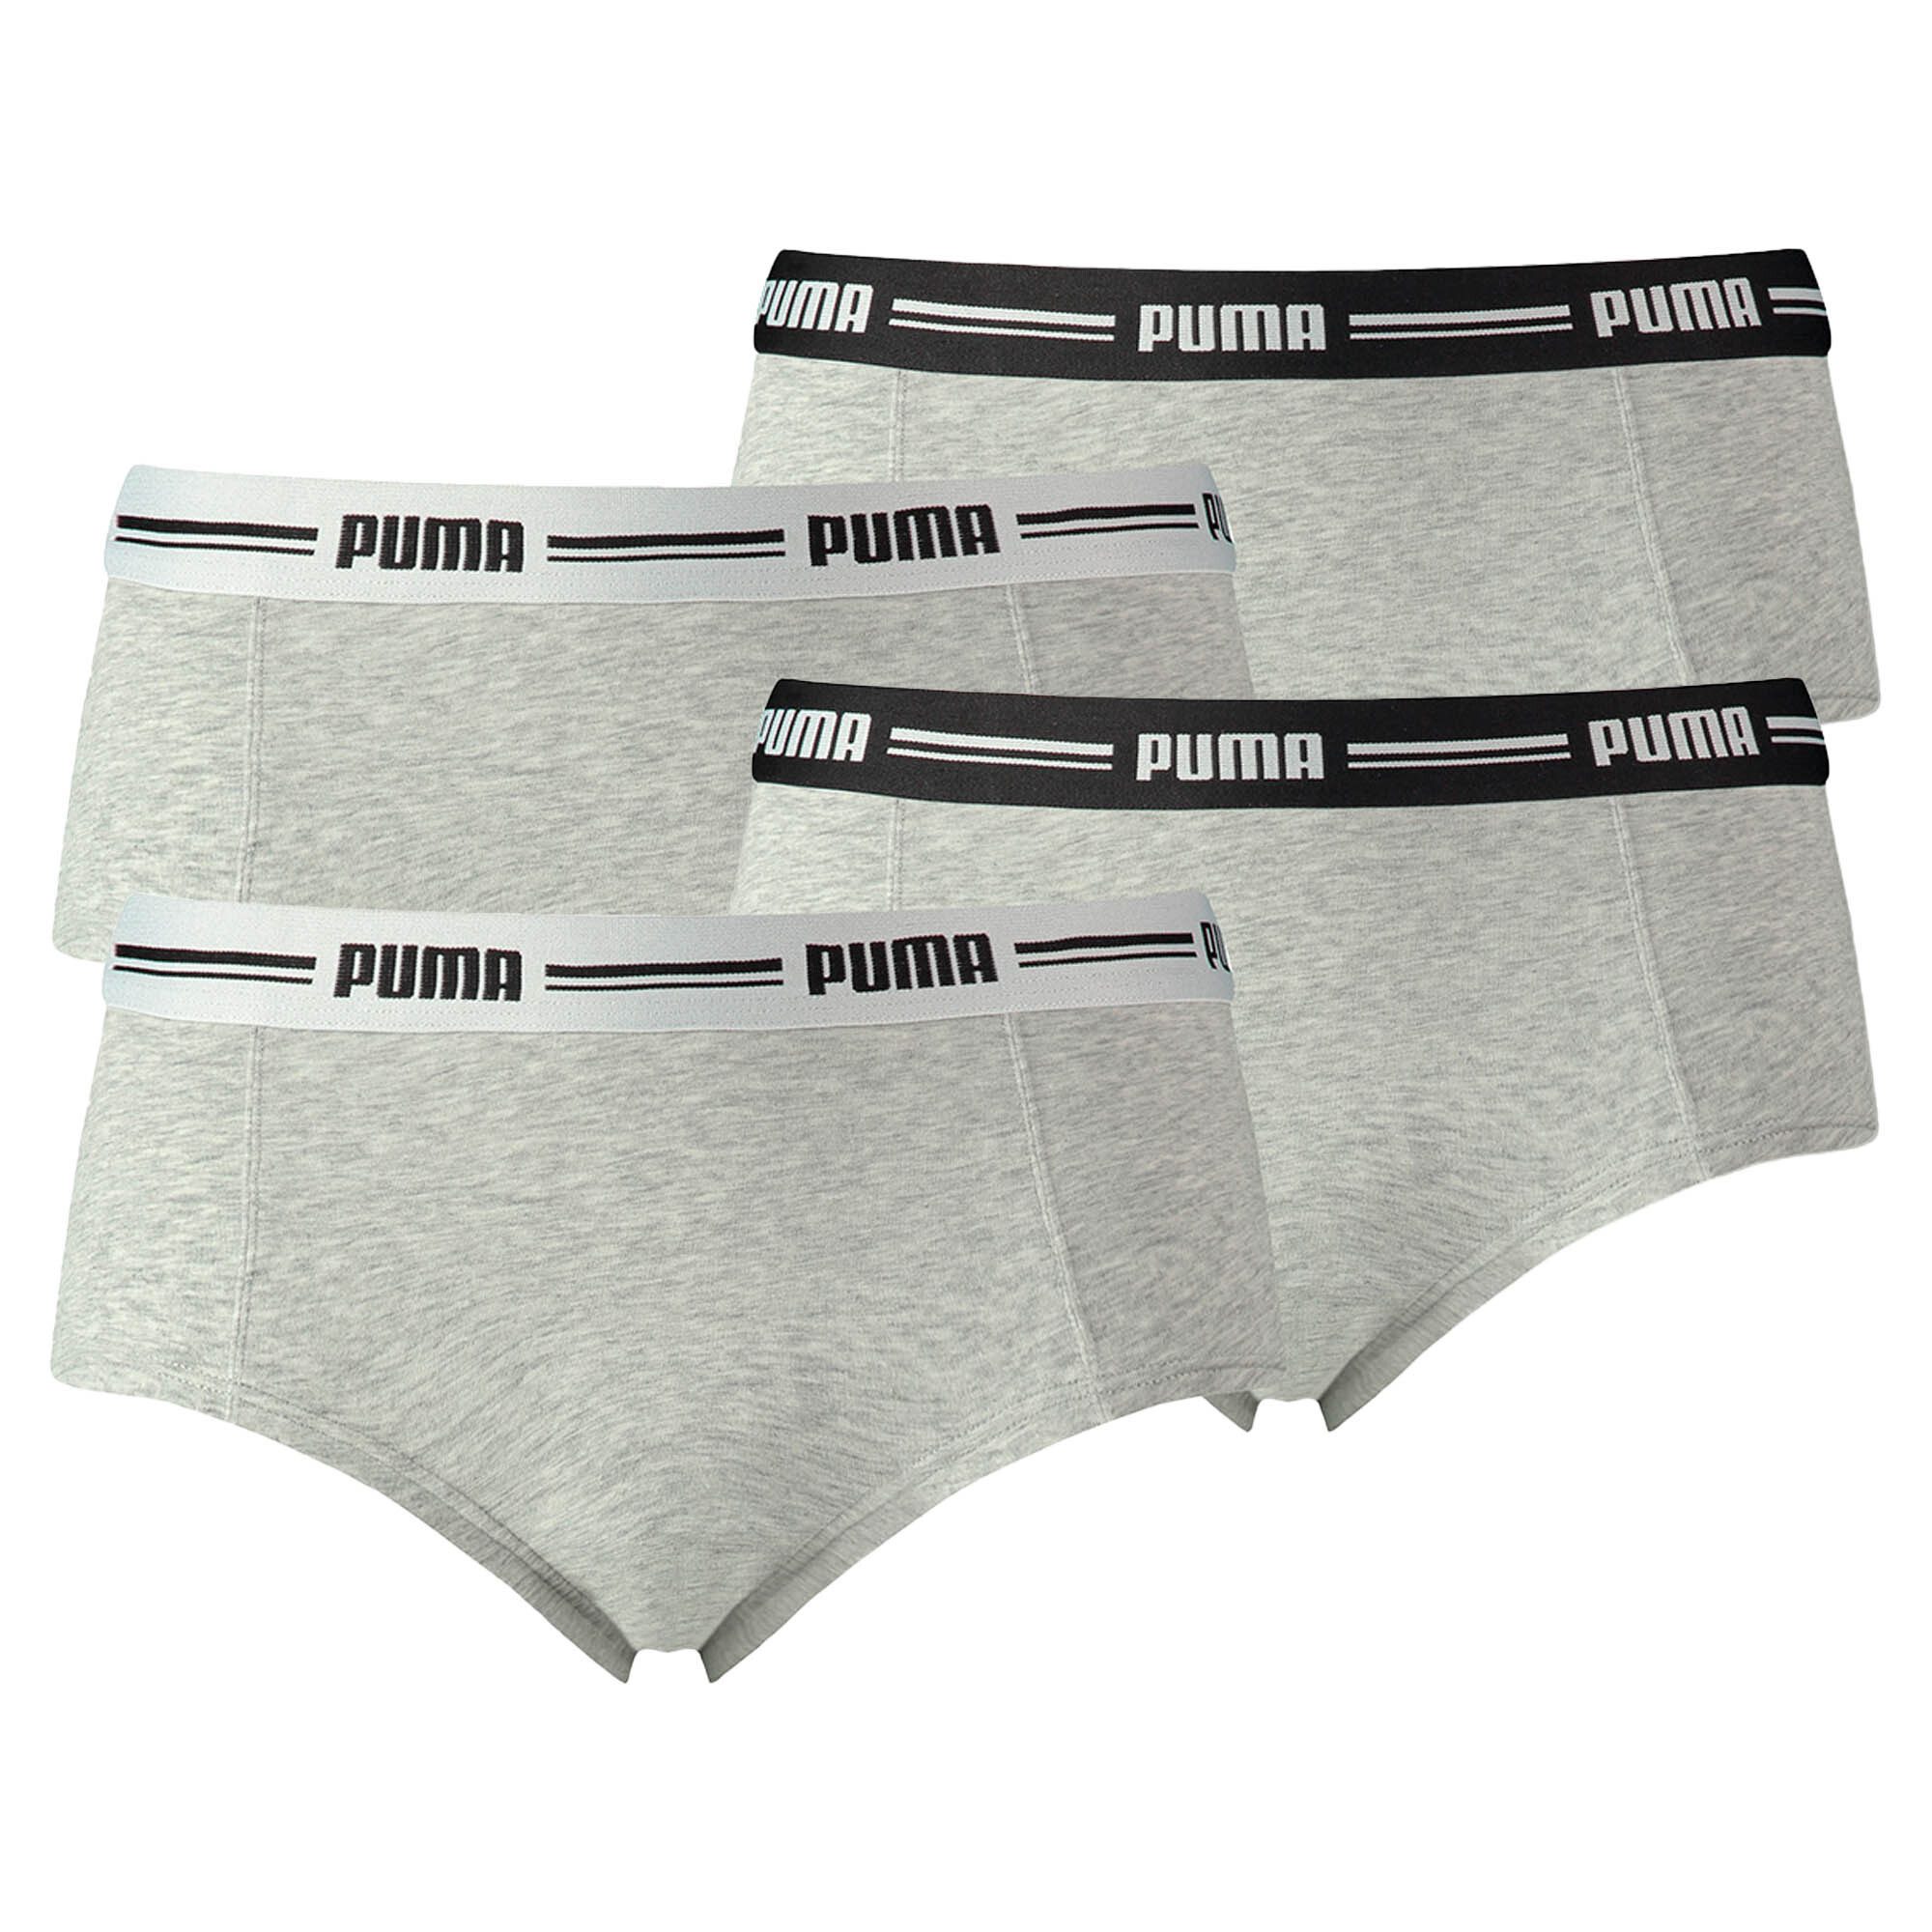 PUMA Panty Damen Mini Shorts - Iconic, Soft Cotton Modal